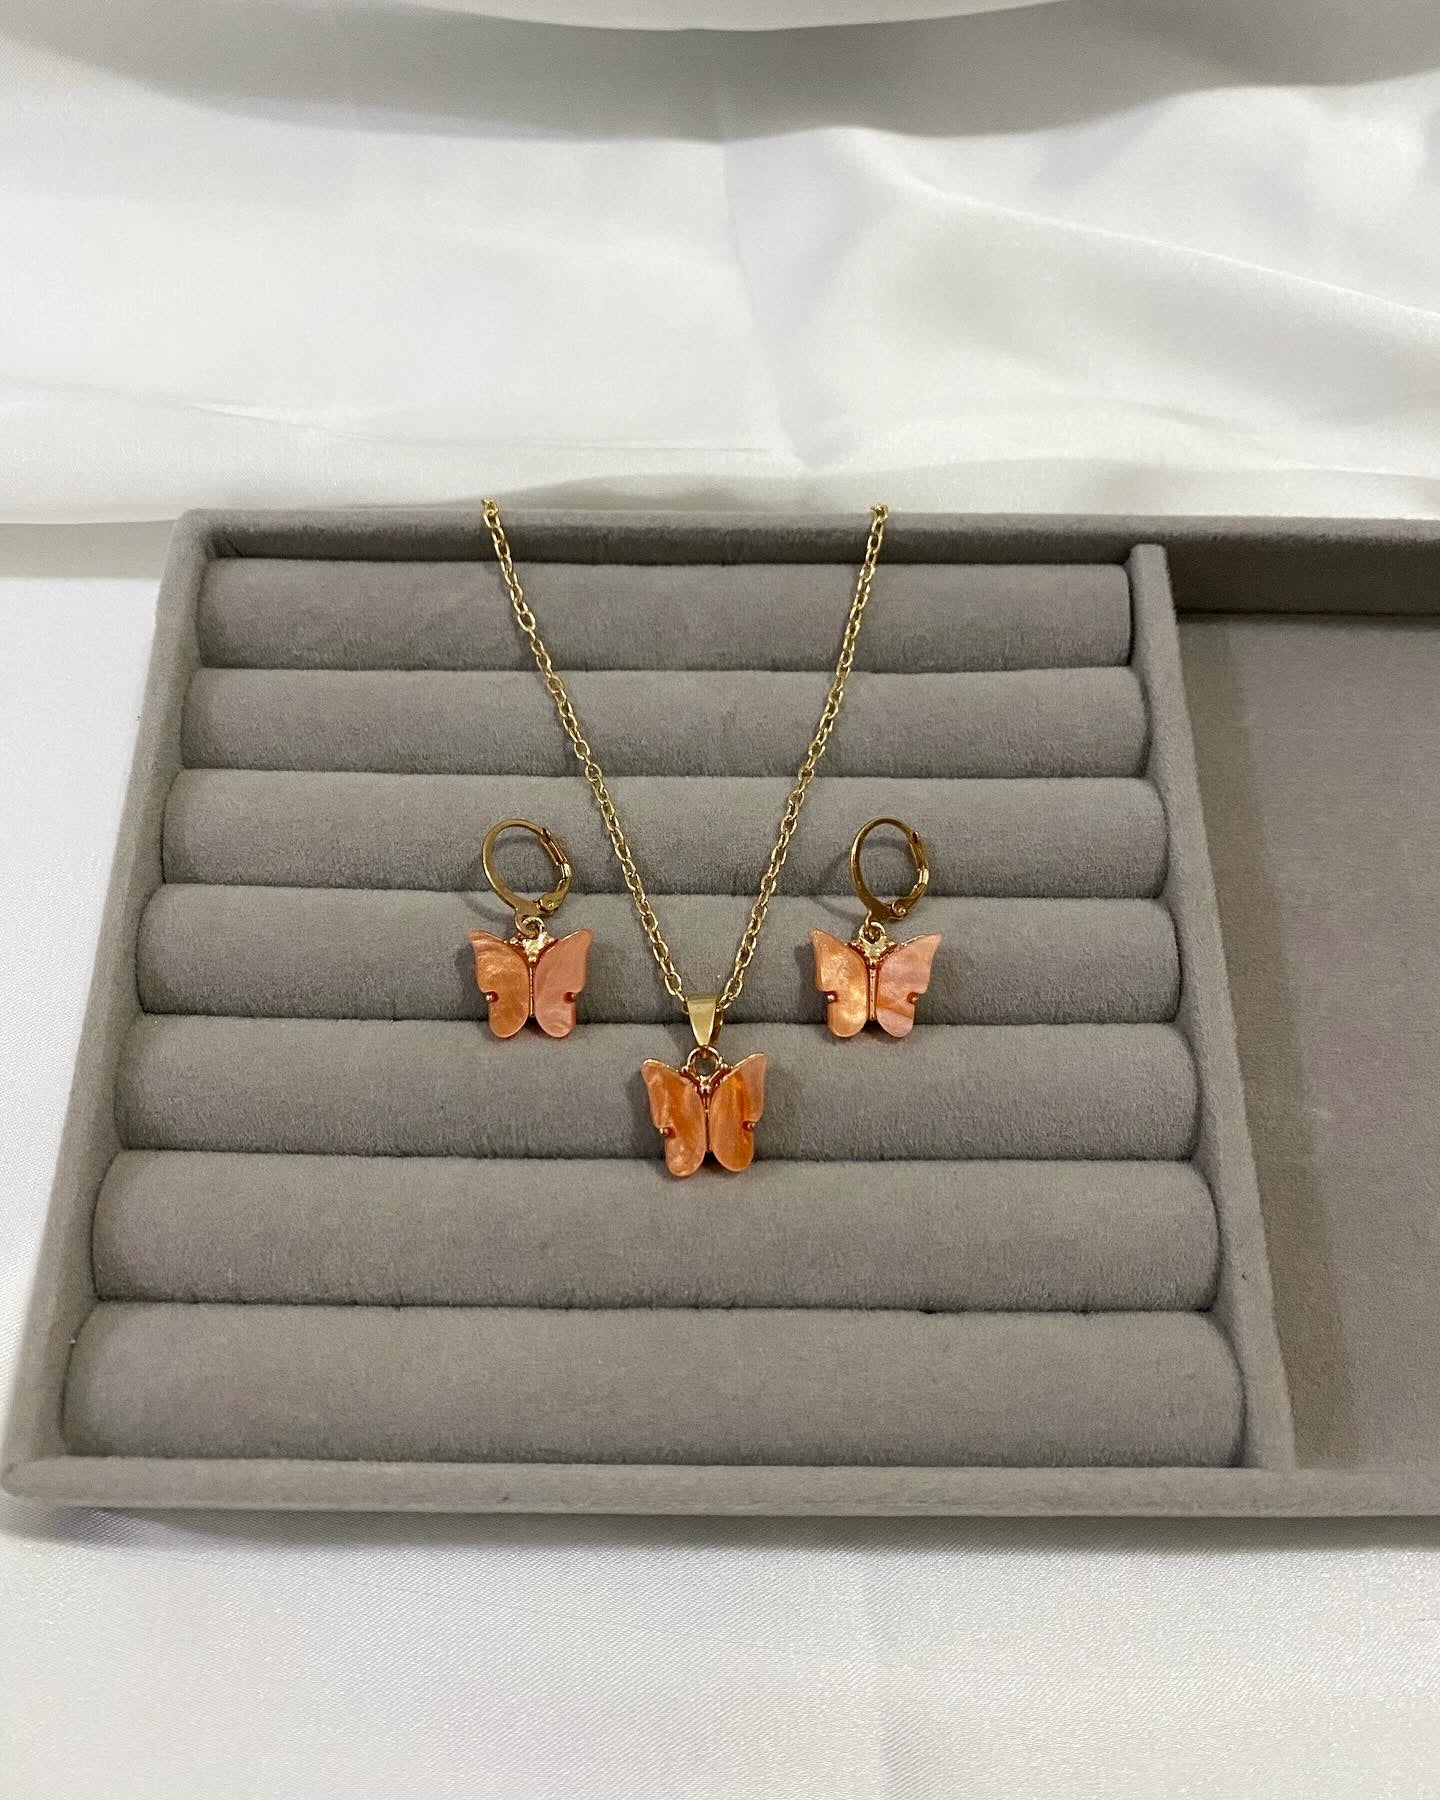 Butterfly necklace set